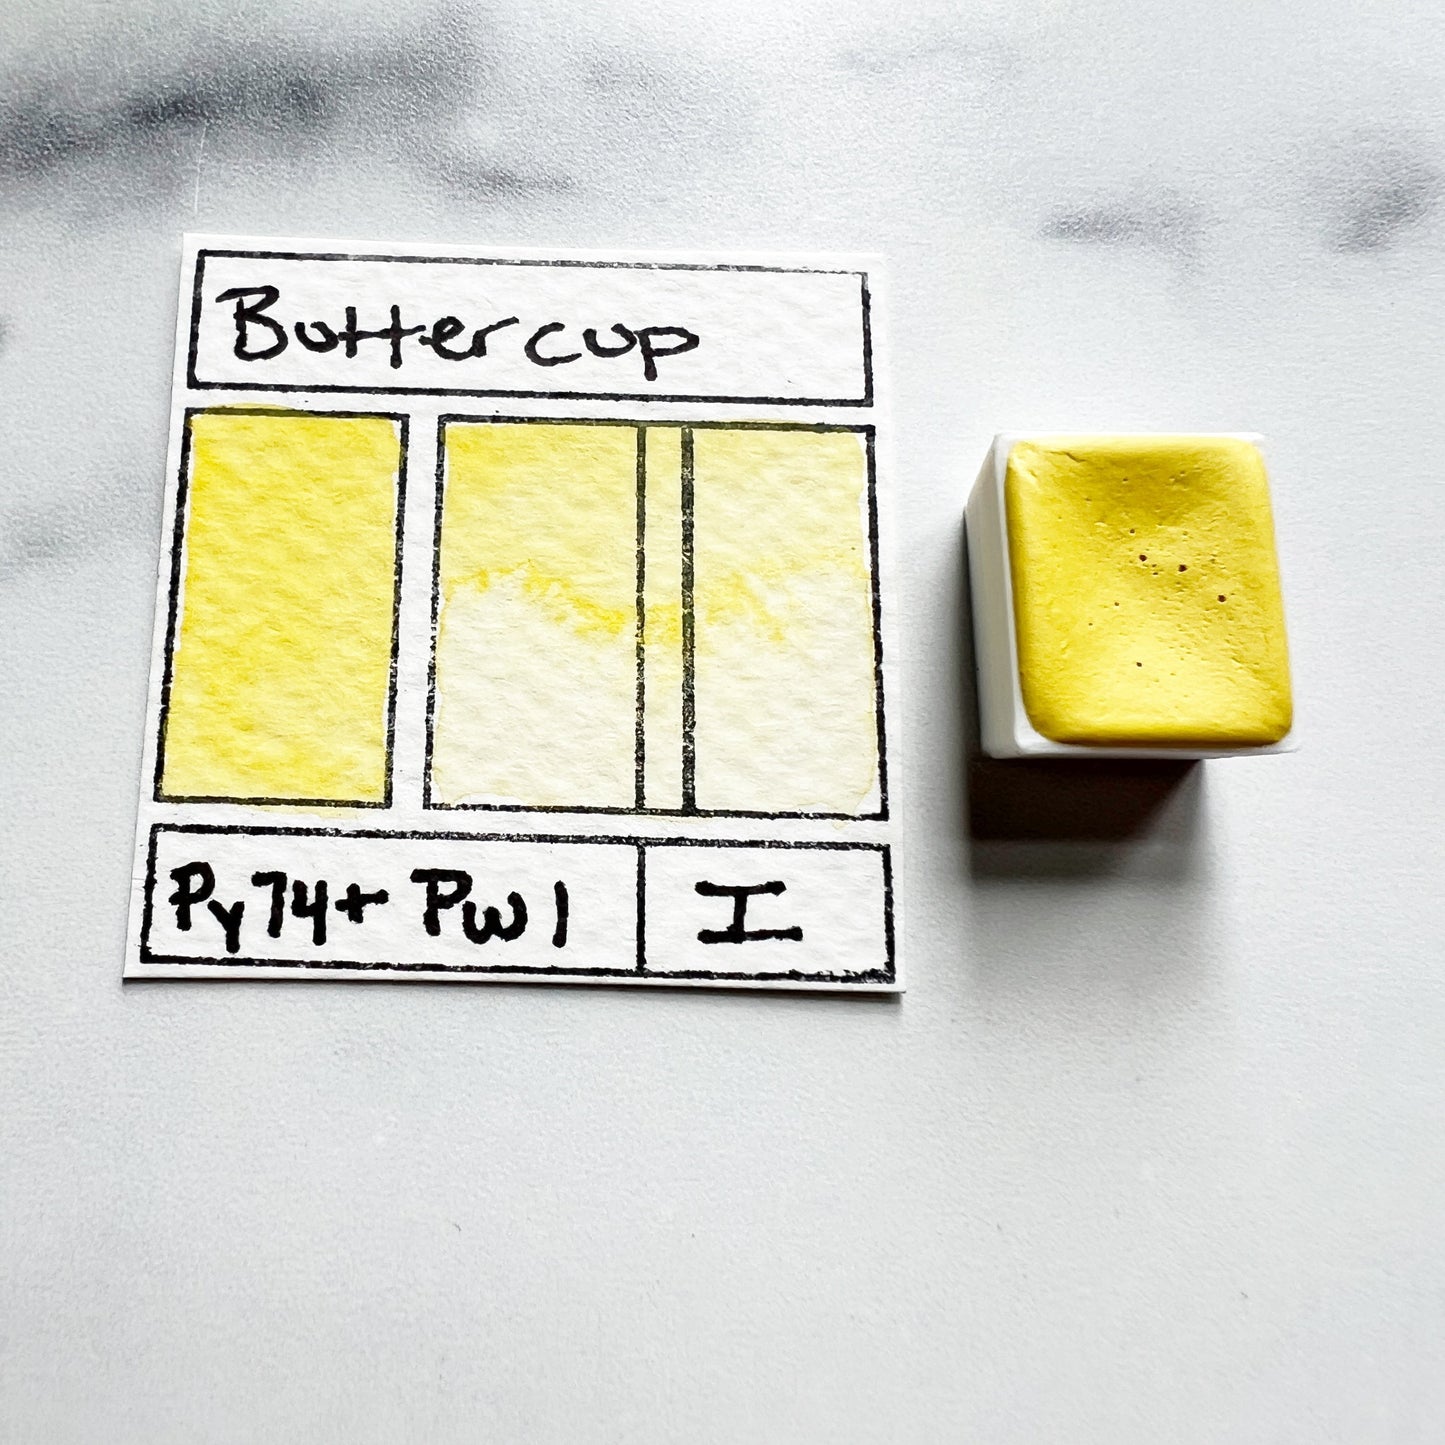 Buttercup. Half pan or bottle cap of handmade watercolor paint